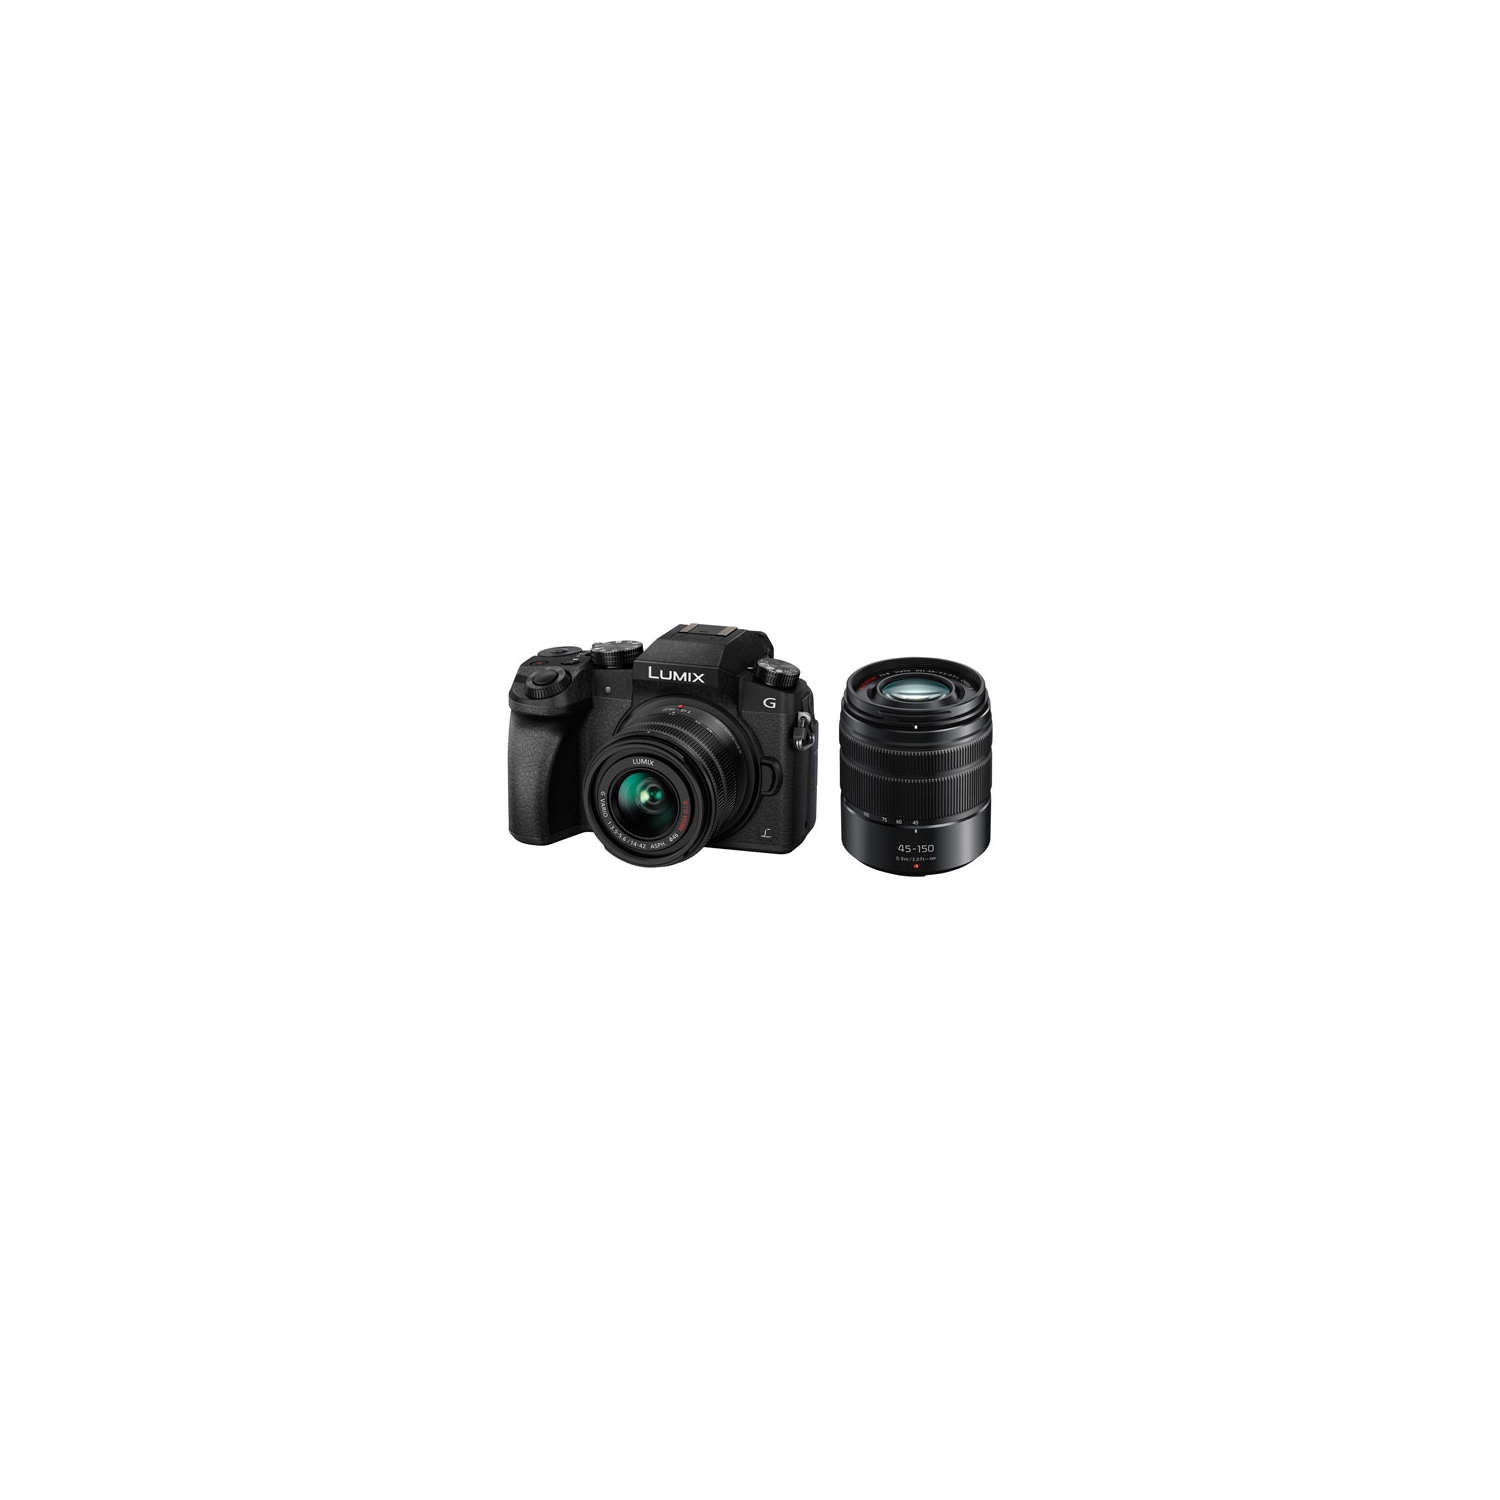 Panasonic LUMIX G7 Mirrorless Camera with 14-42mm & 45-150mm Lens Kit - Open Box